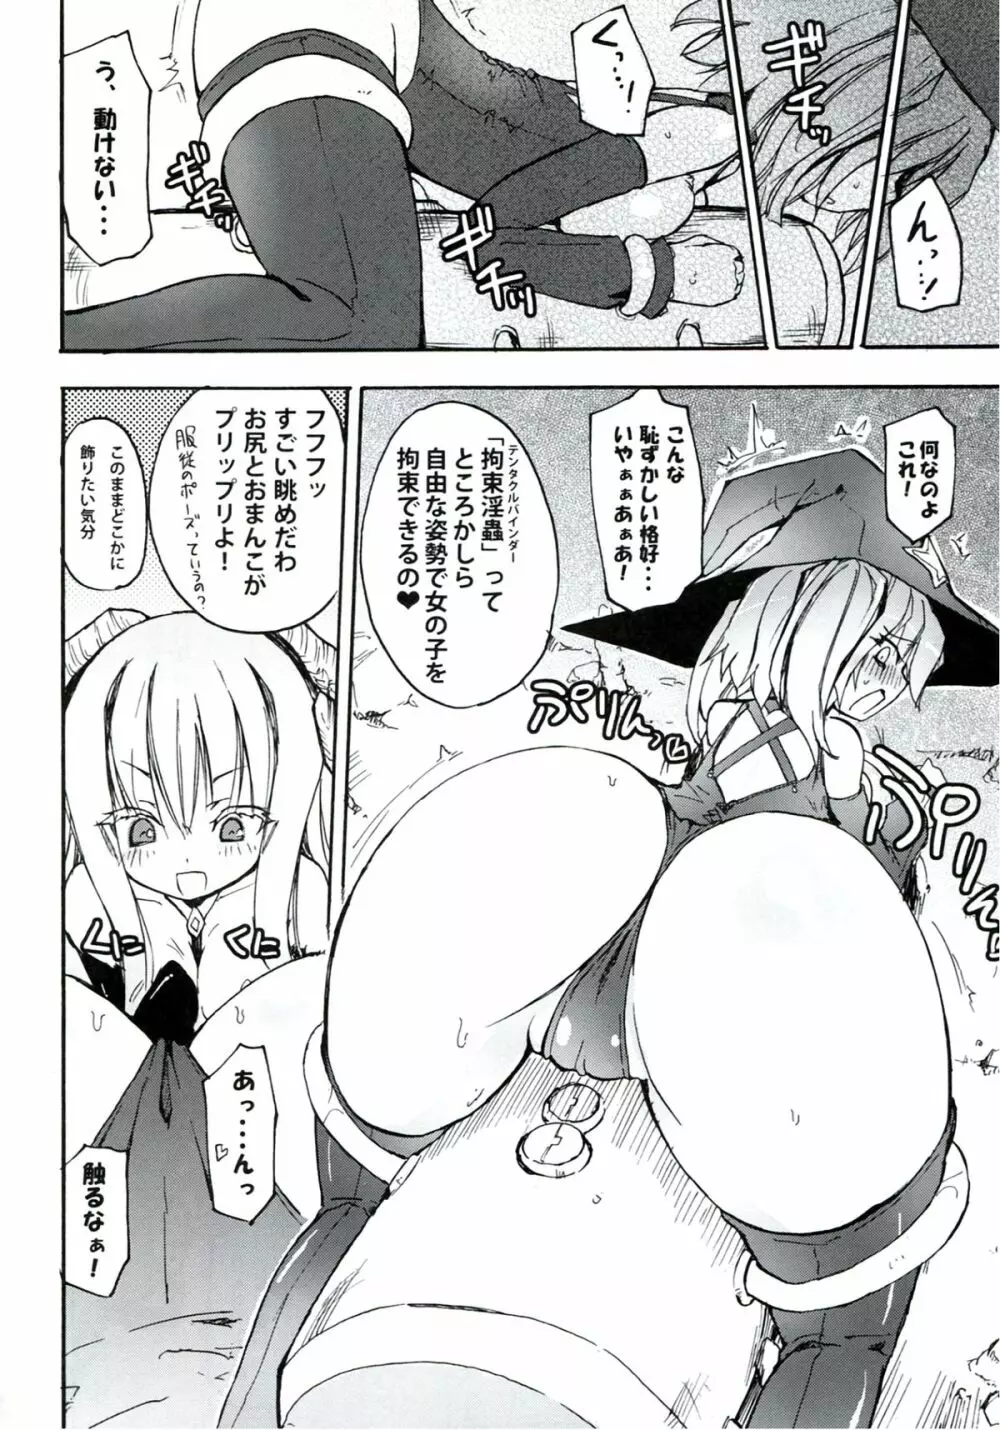 Homuraya Milk ★ Collection 2 - page44